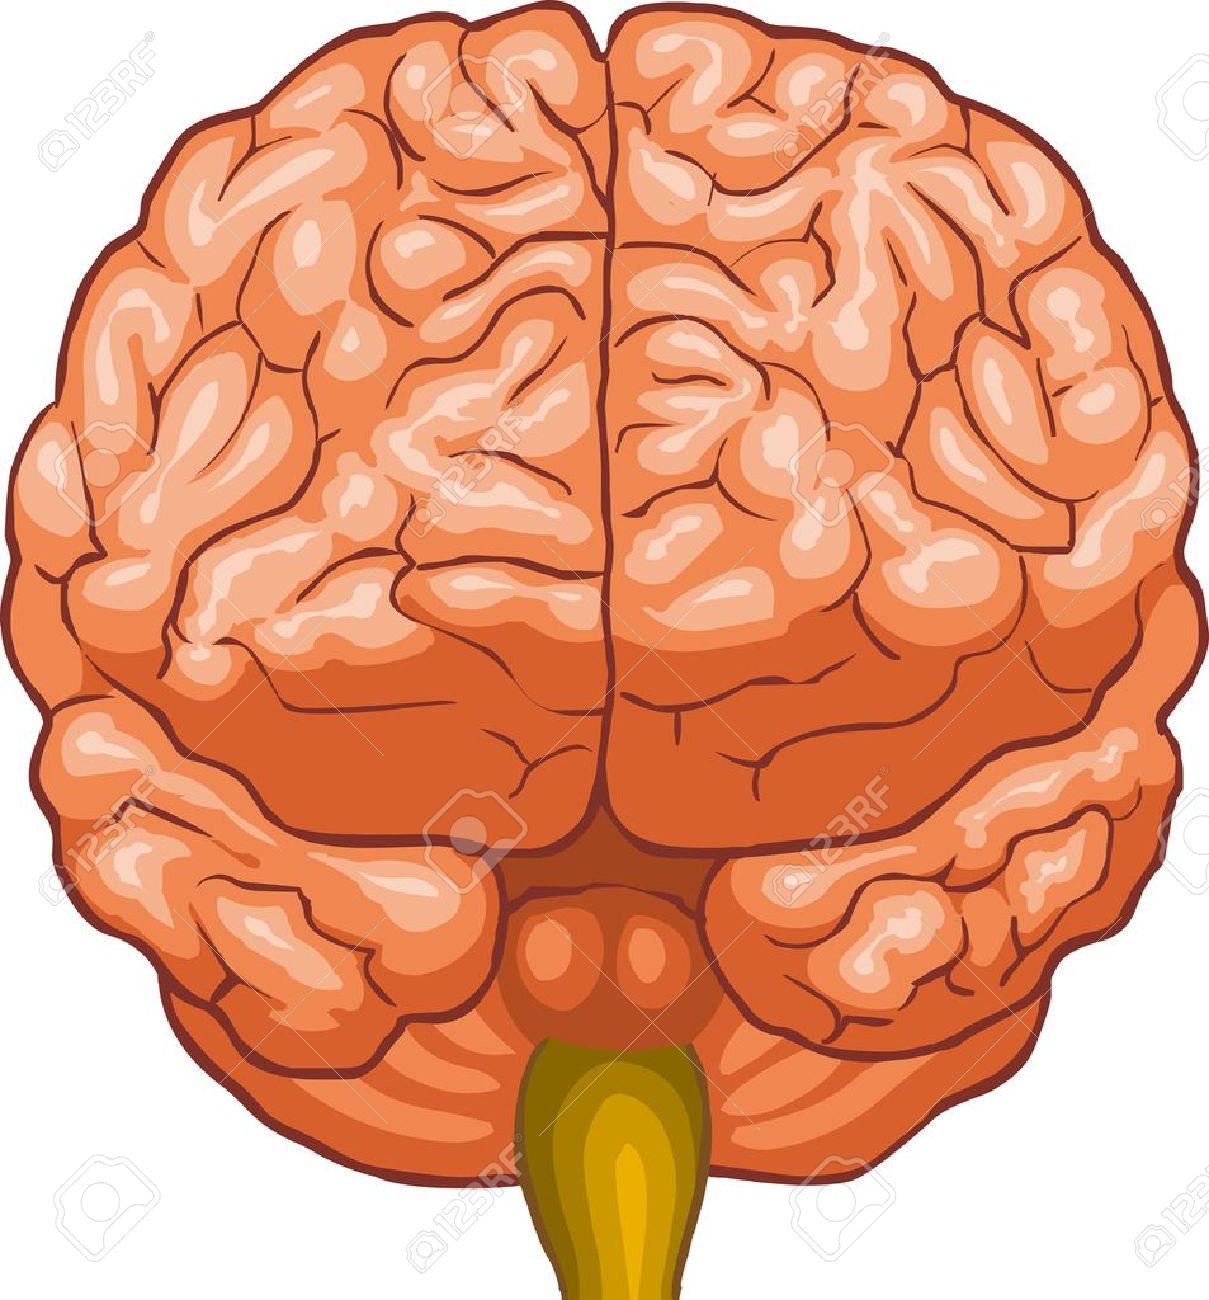 Brain telepathy stock vector illustration and royalty free telepathy clipart